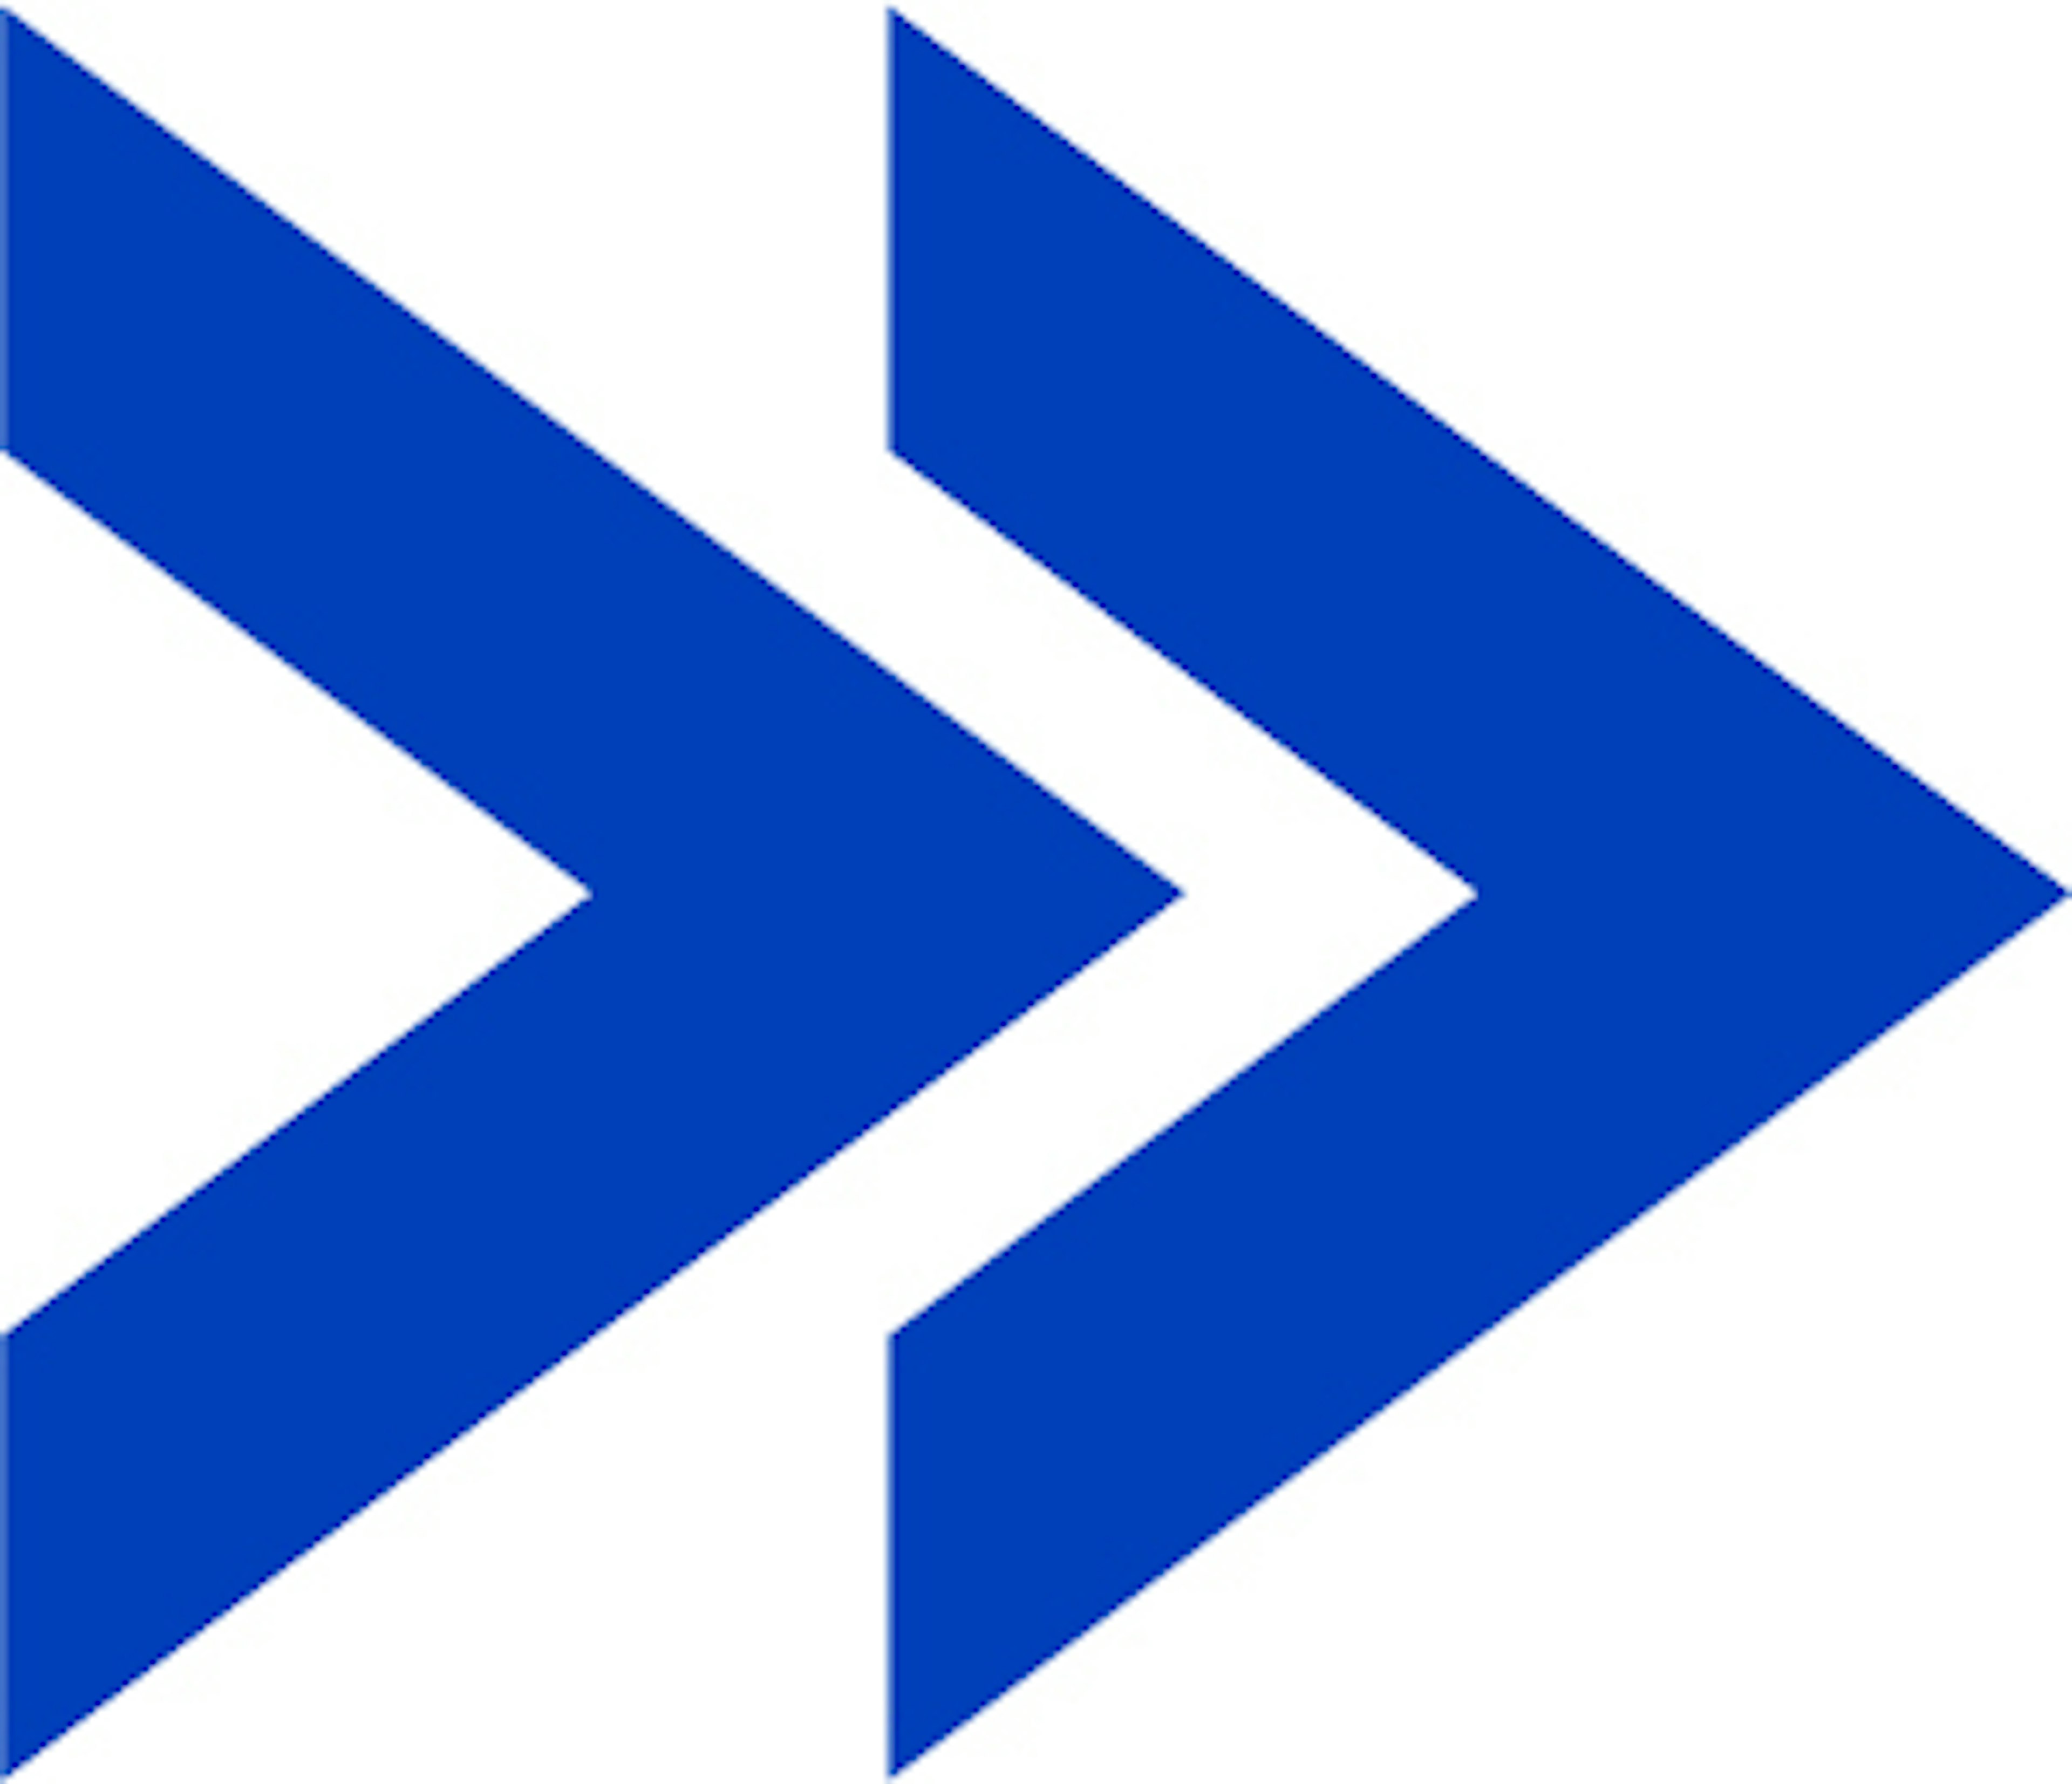 Payapps Logo